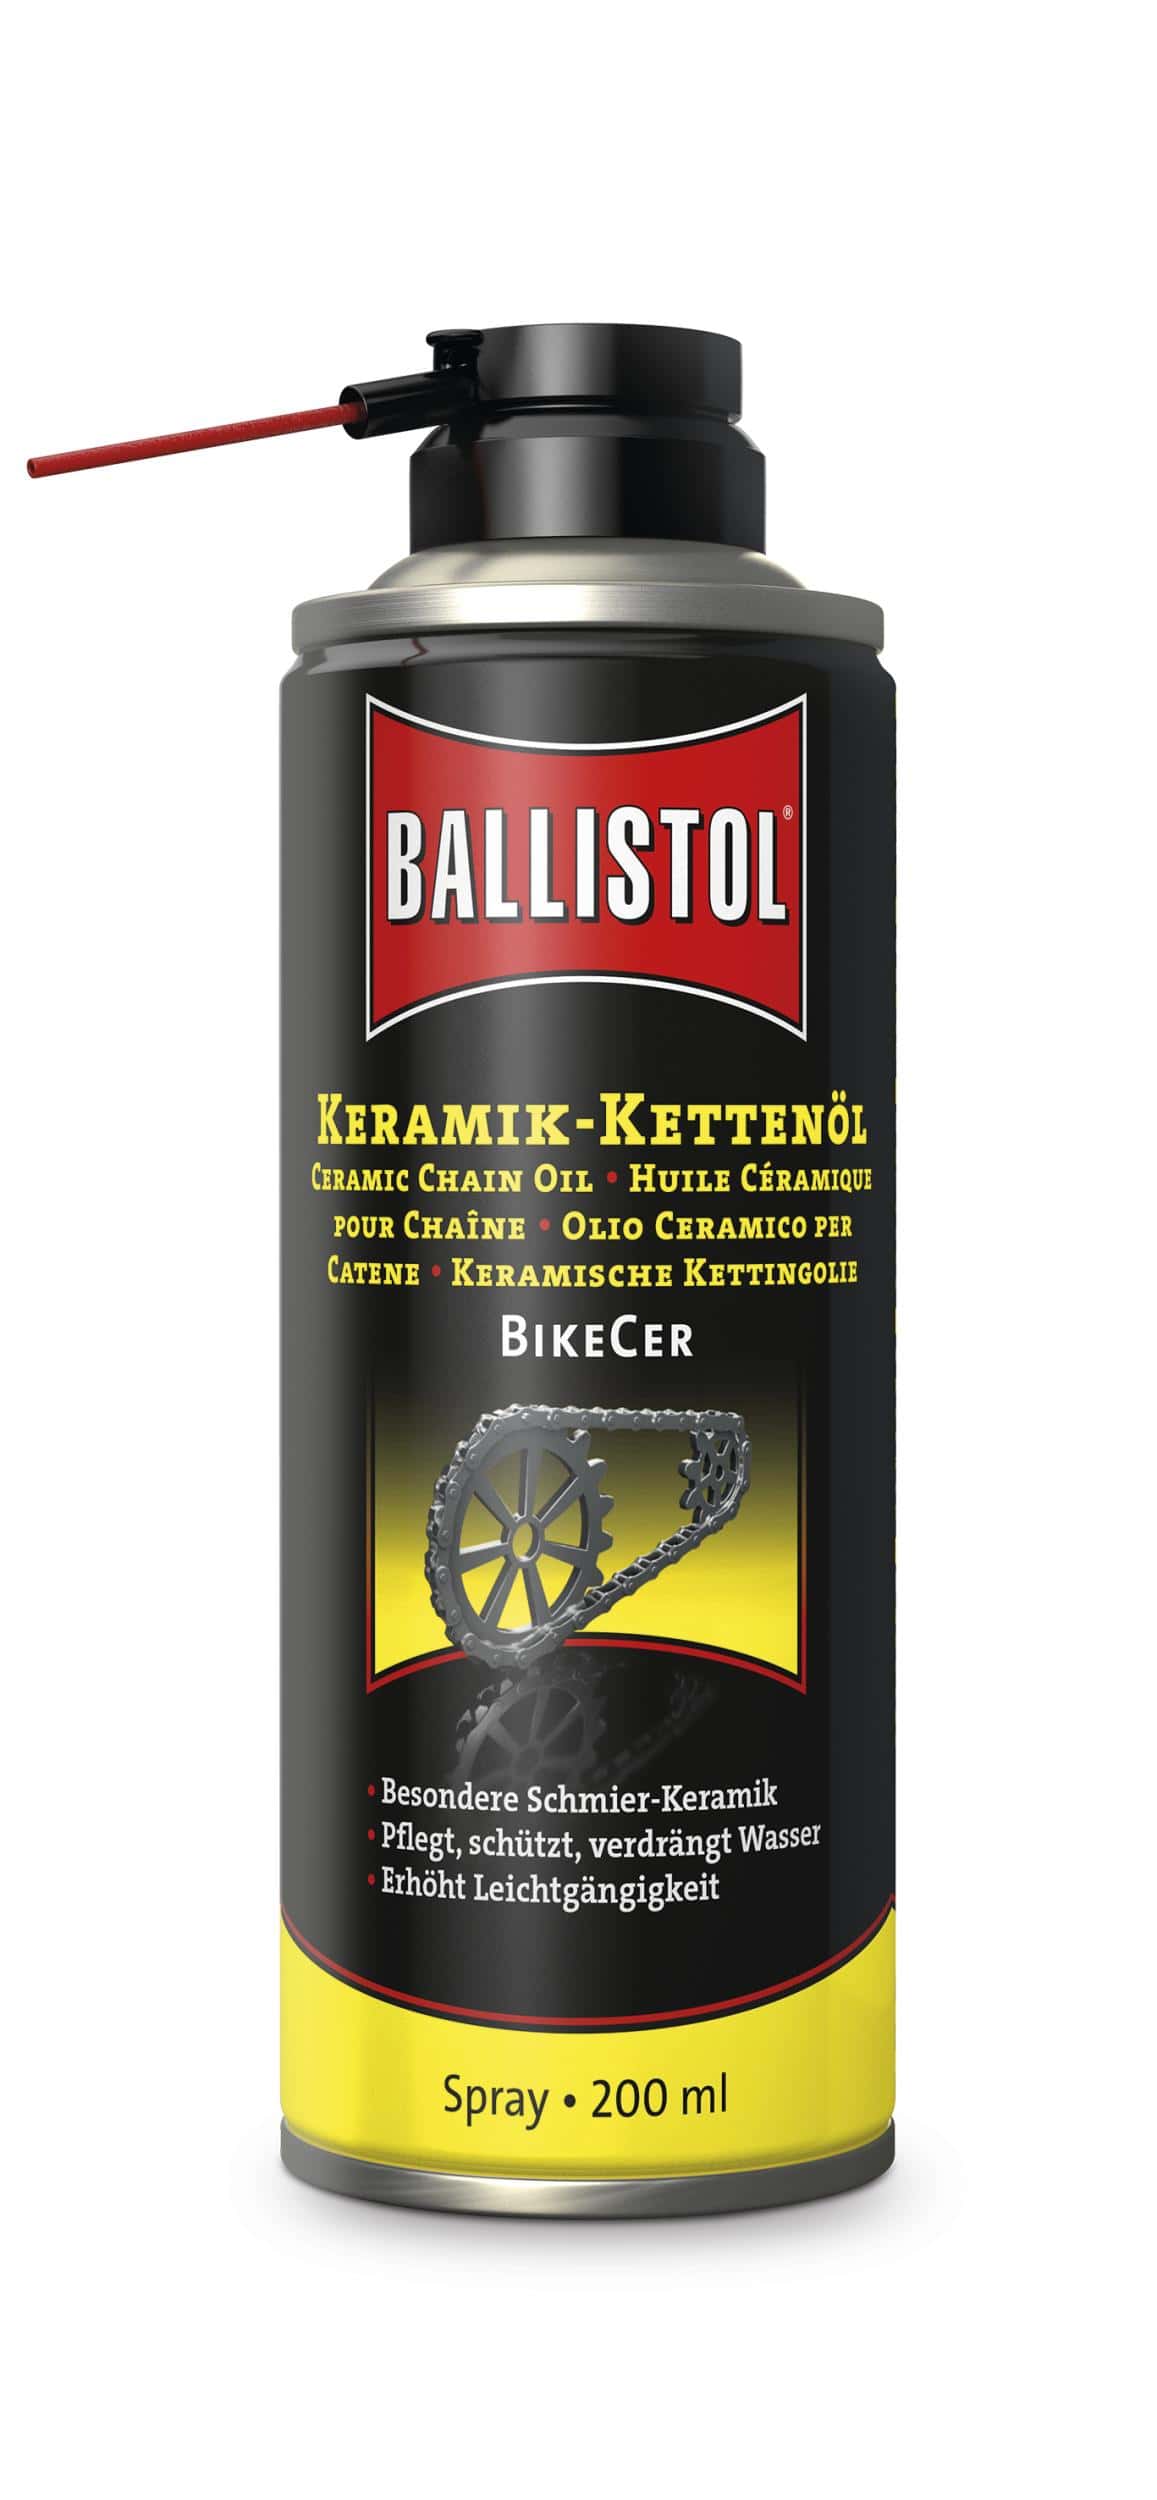 Ballistol Keramik Kettenöl "BikeCer" - 200 ml Spray